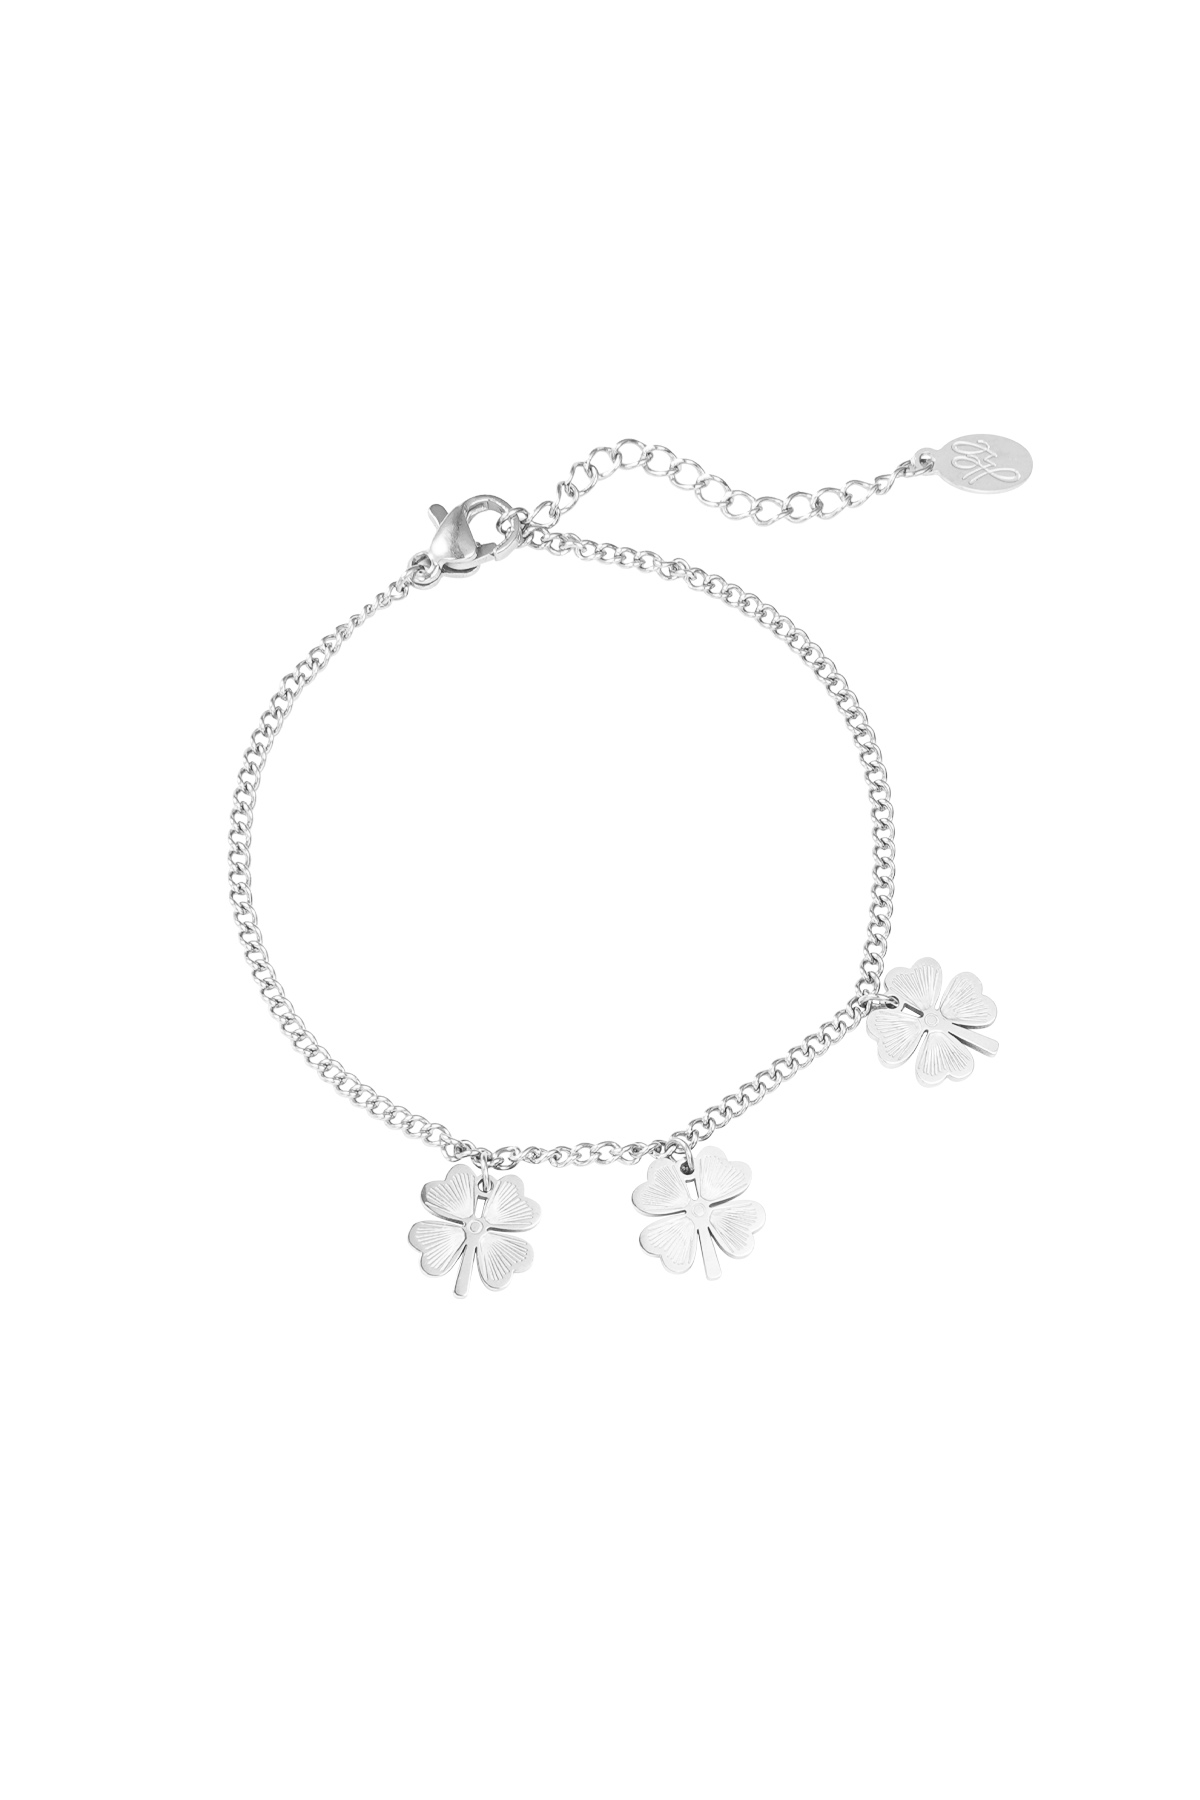 Bracelet clovers - silver h5 